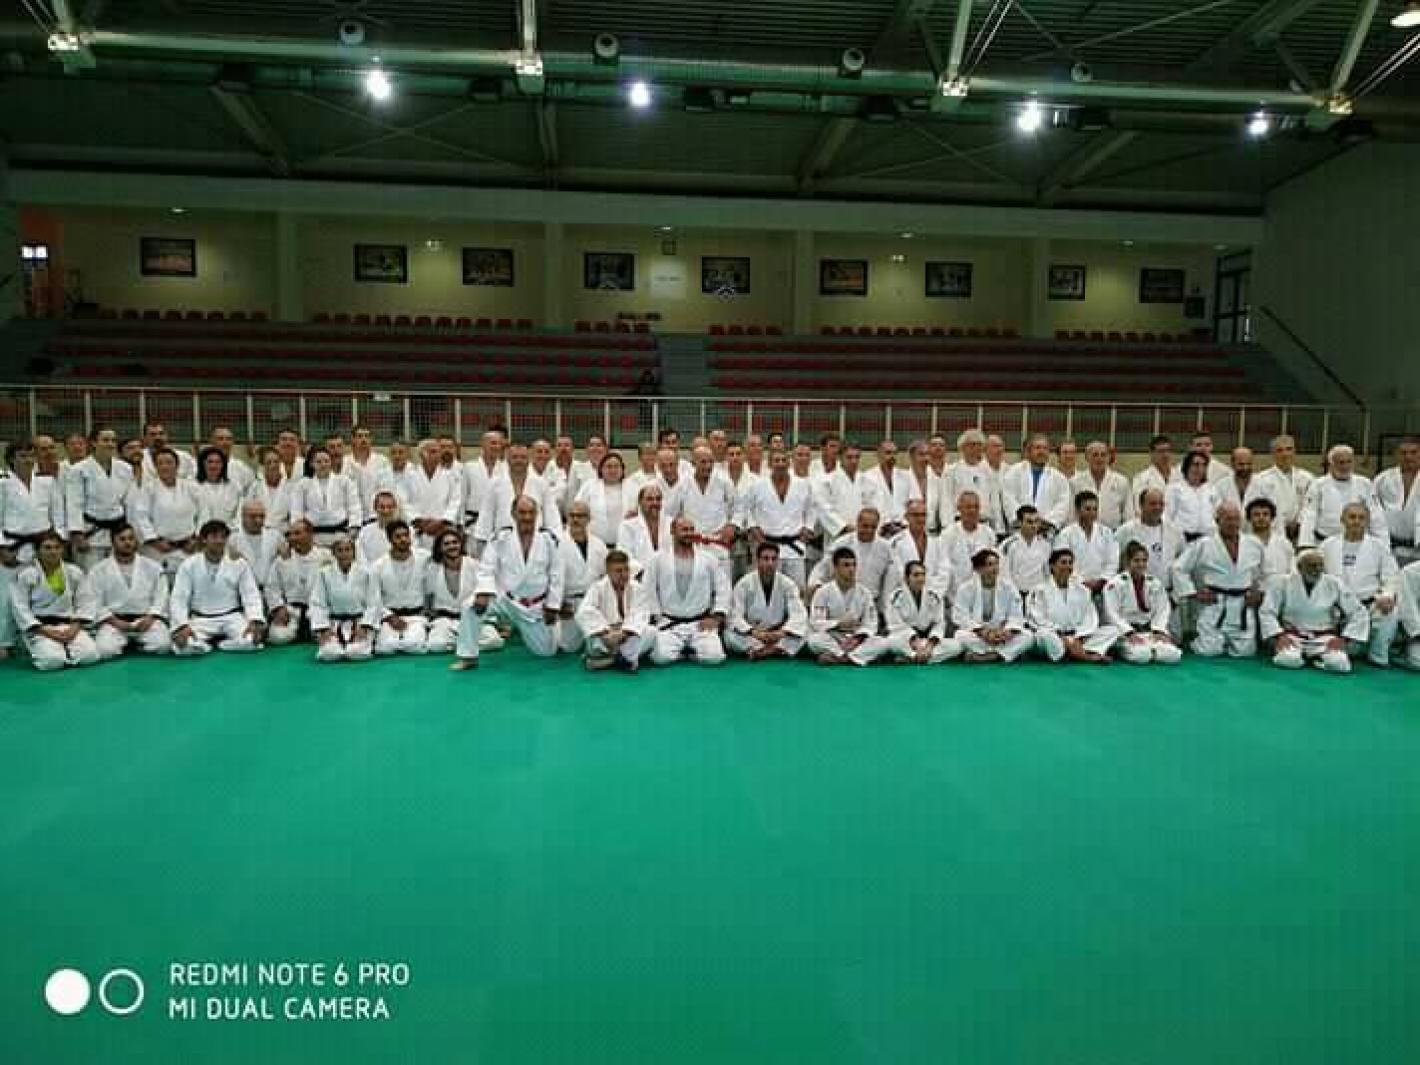 images/liguria/judo/medium/gruppo_tecnici.jpg